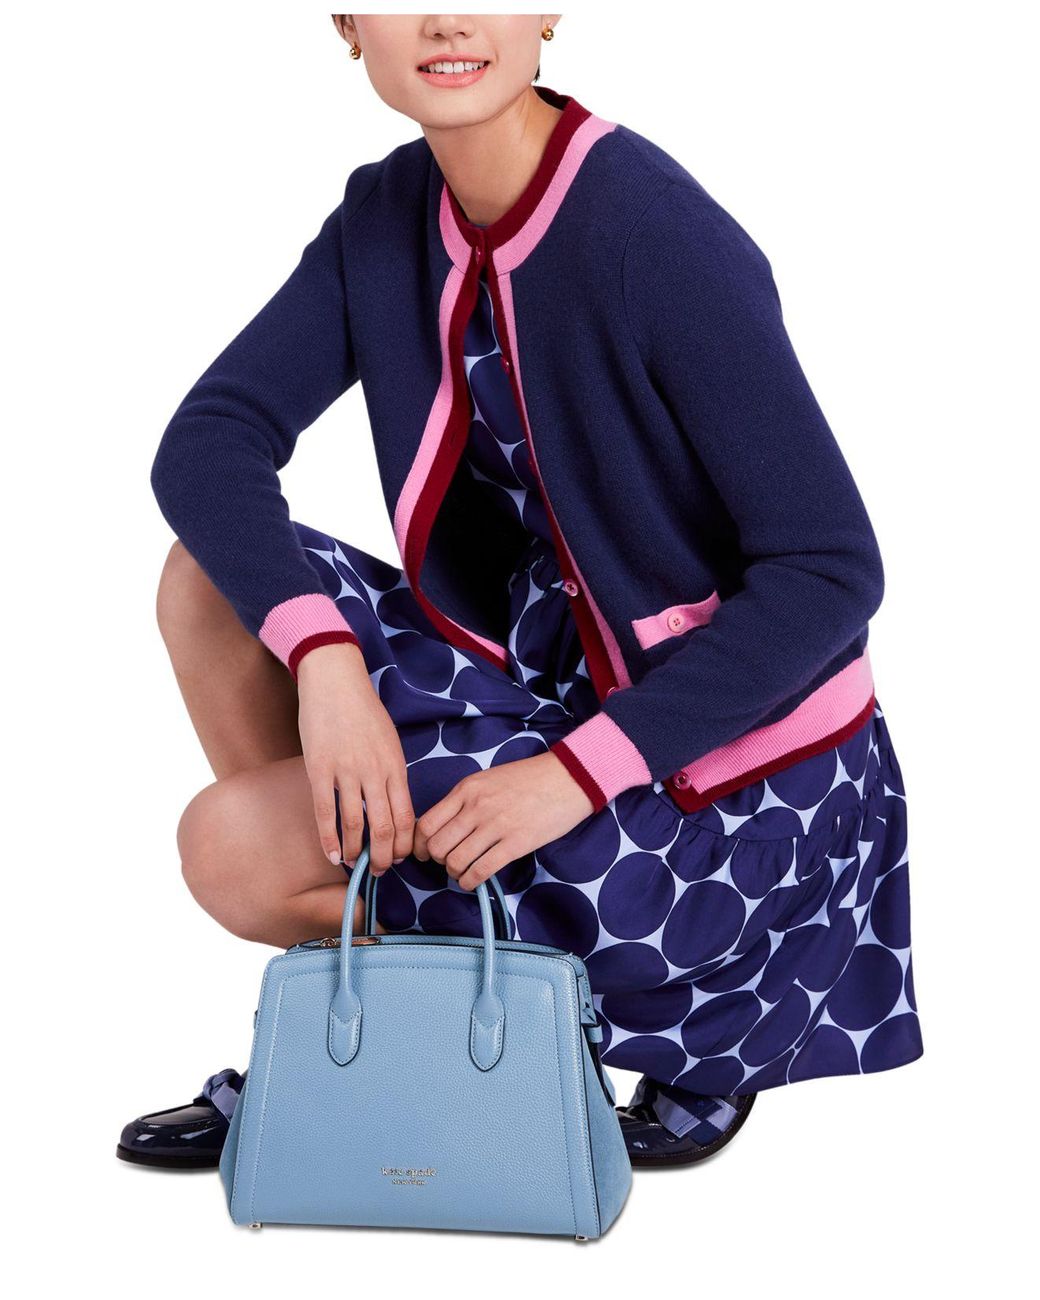 Kate Spade New York Women's Knott Mini Satchel Bag - Crystal Blue